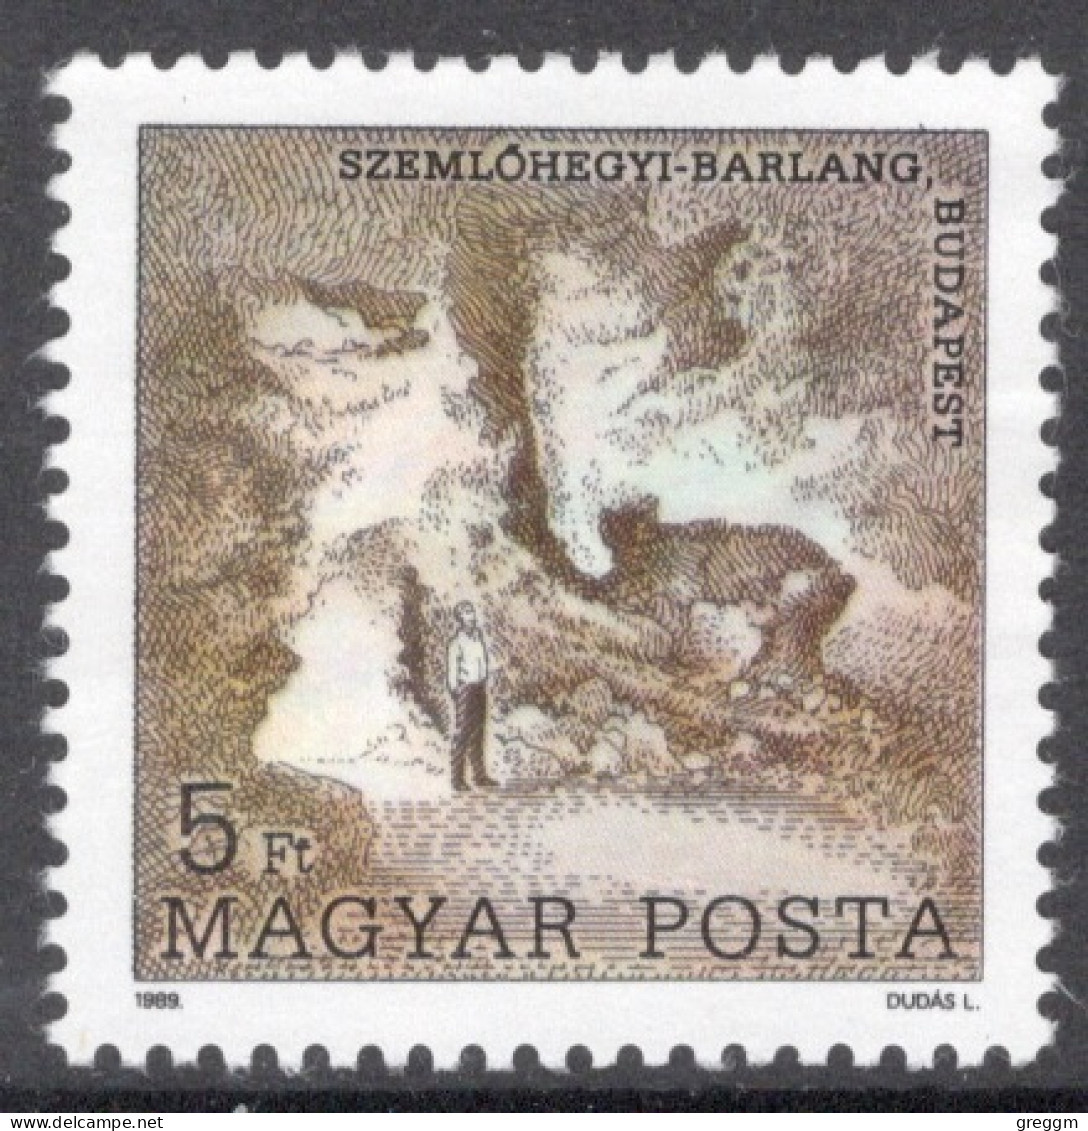 Hungary 1989 Single Stamp Celebrating World Speleology Congress In Fine Used - Gebruikt